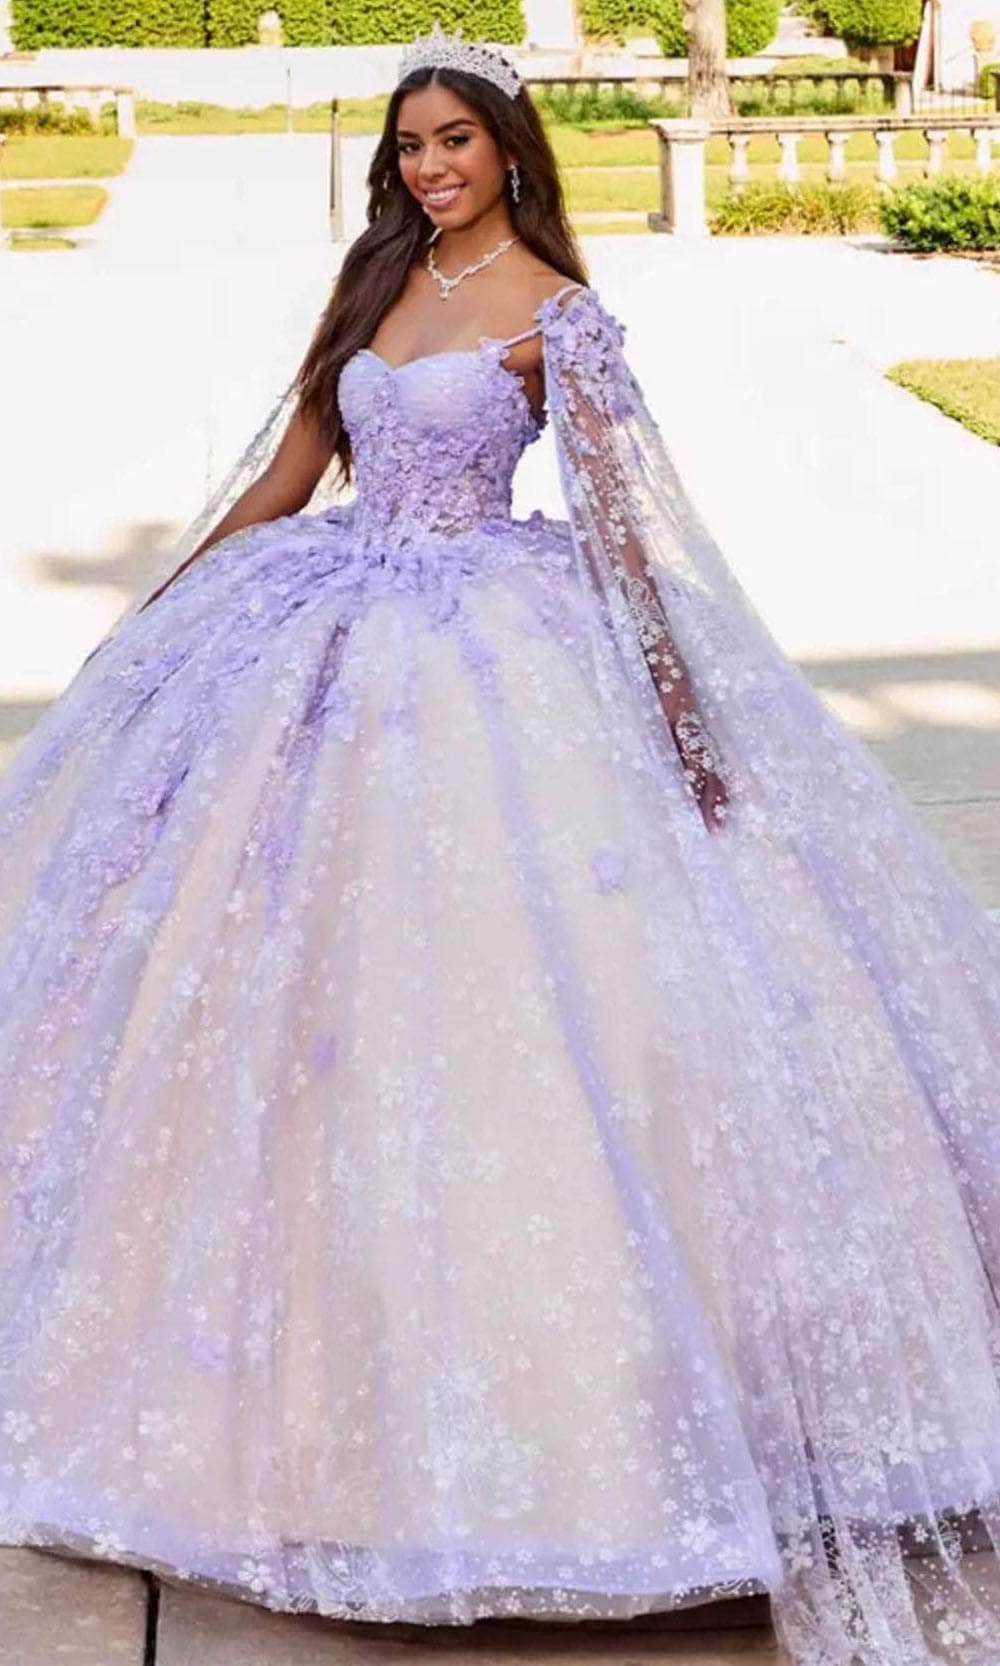 Princesa by Ariana Vara PR30158 - Corset Bodice Sleeveless Gown Prom Dresses 00 / Lilac/Champagne